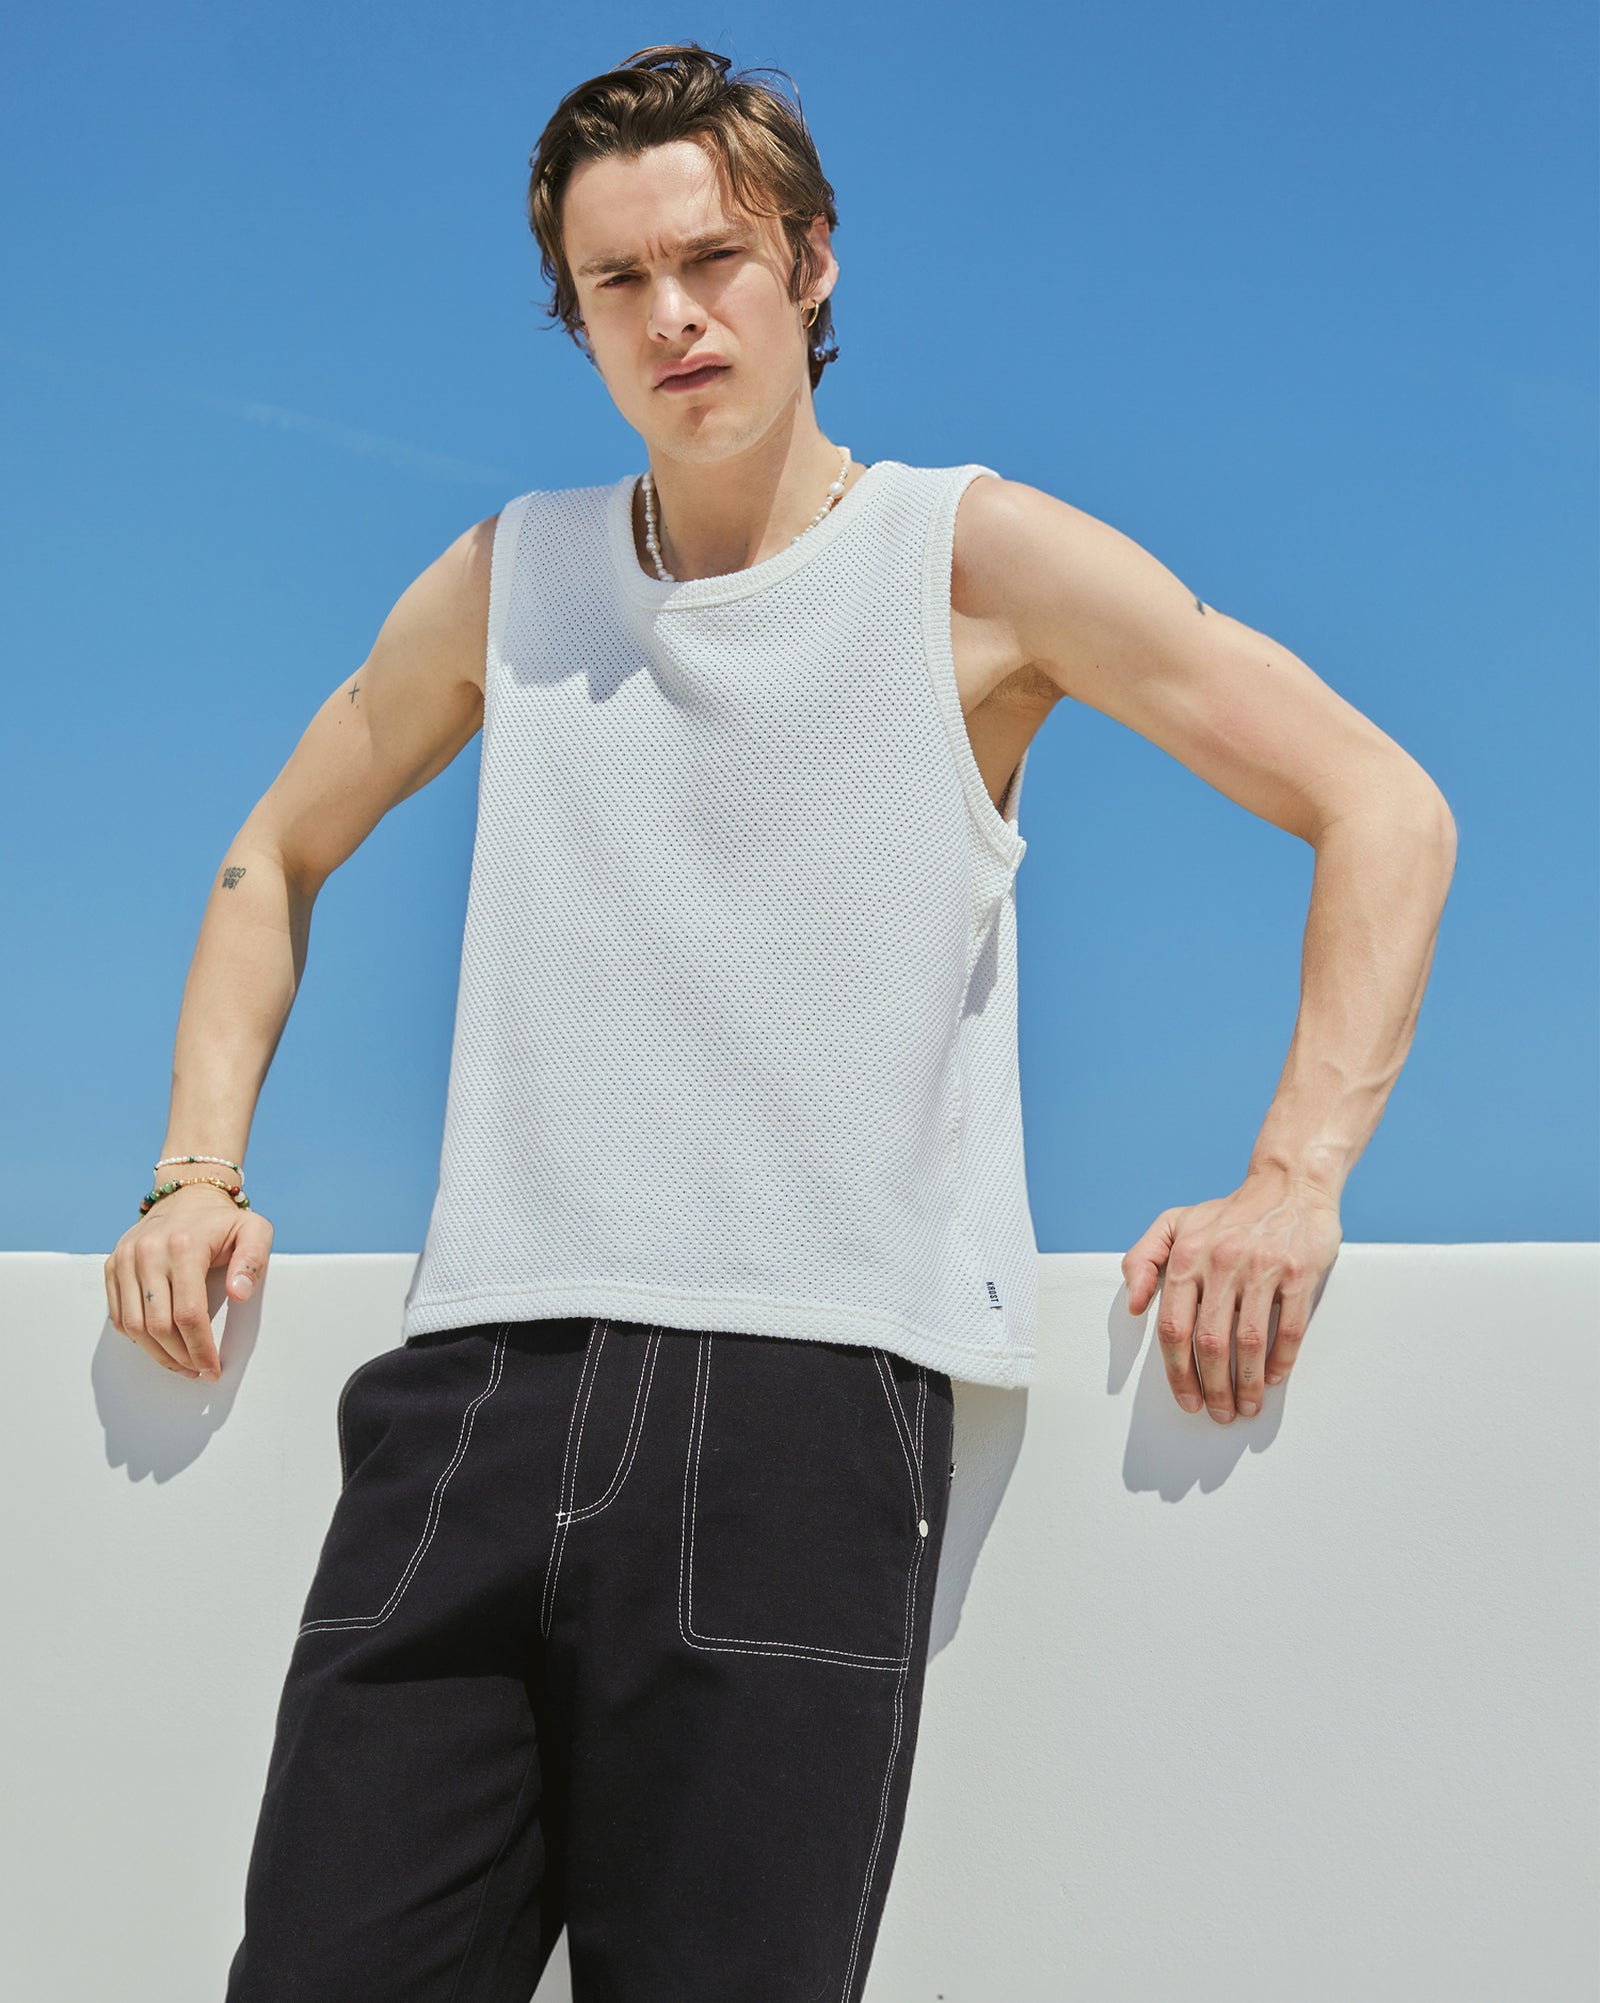 White tank top - unisex fashion tops for men & women by Krost.